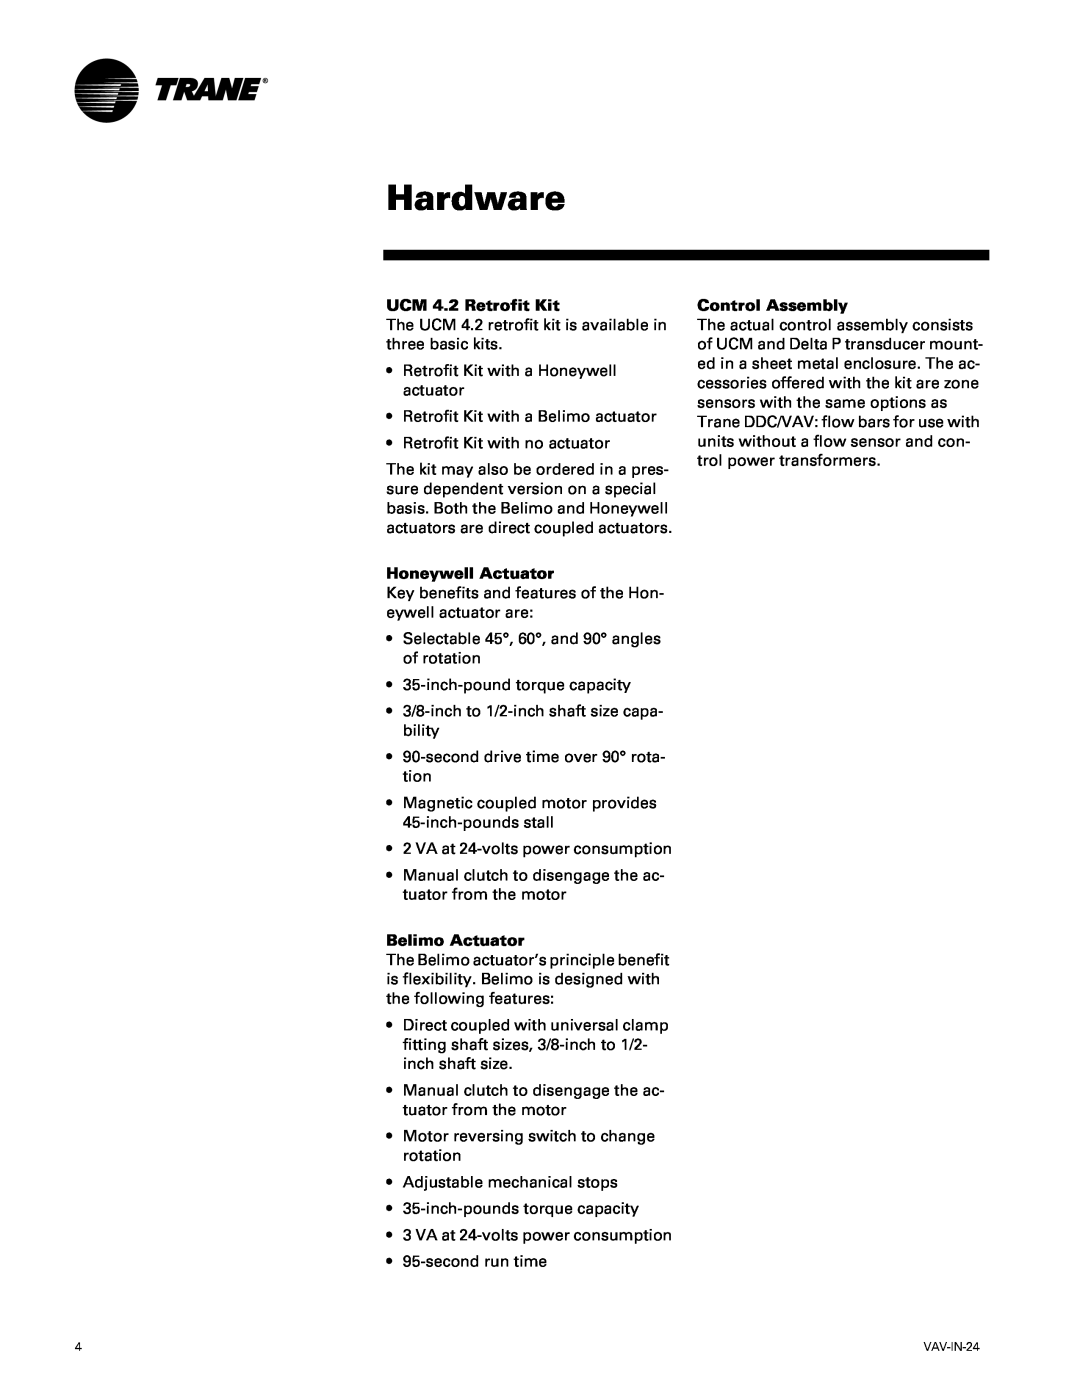 Trane VAV-IN-24 manual Hardware, UCM 4.2 Retrofit Kit, Honeywell Actuator, Belimo Actuator, Control Assembly 